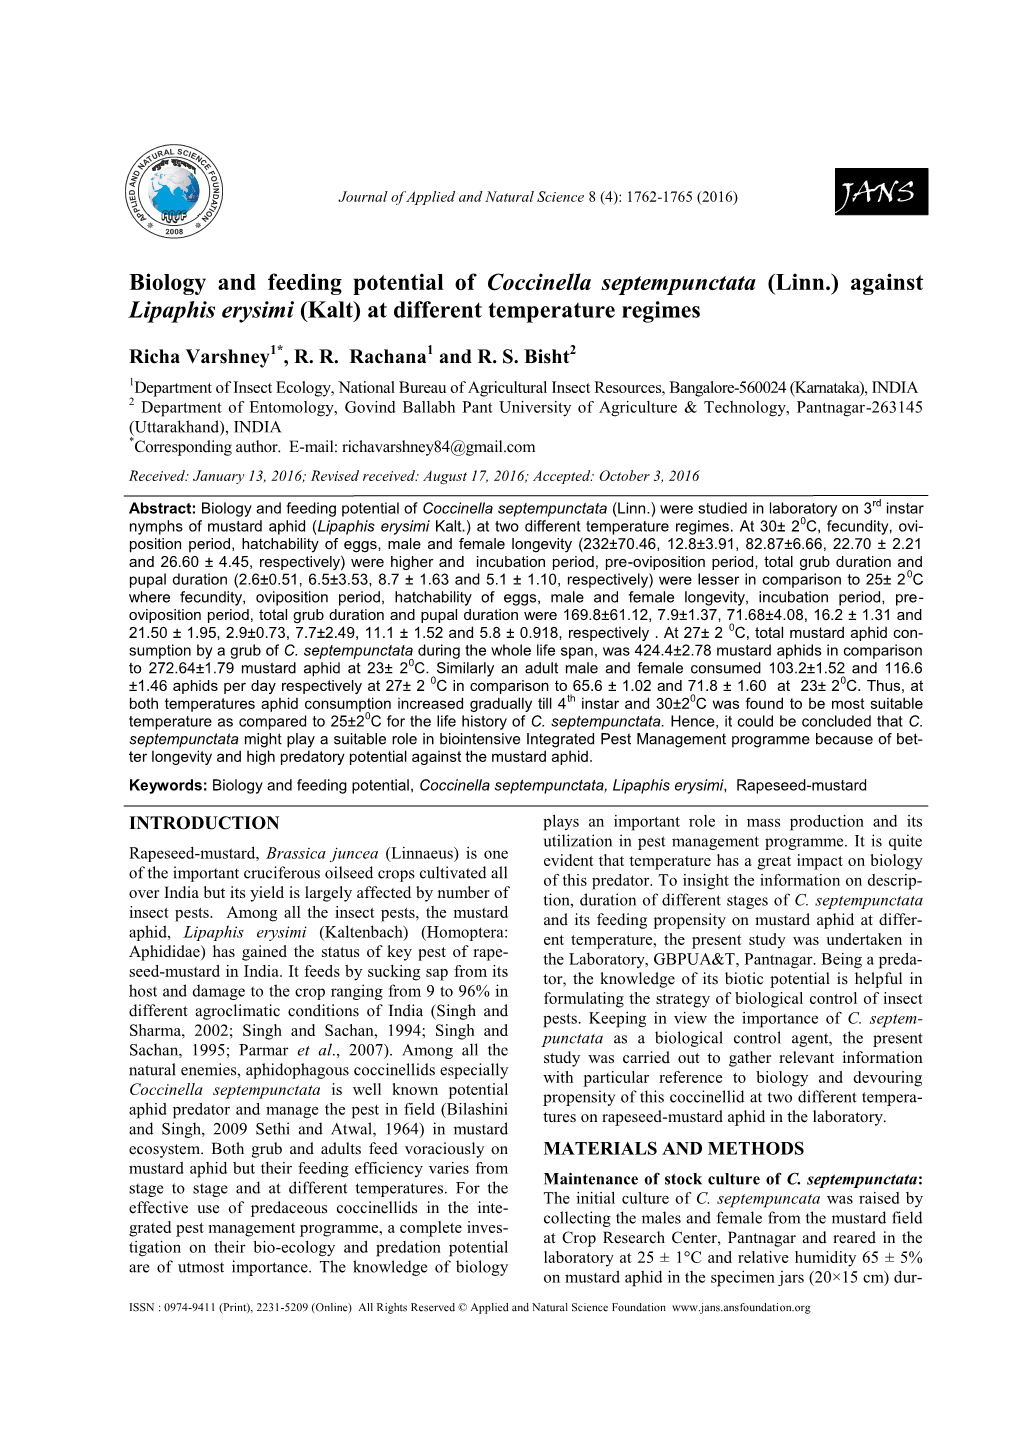 Biology and Feeding Potential of Coccinella Septempunctata (Linn.) Against Lipaphis Erysimi (Kalt) at Different Temperature Regimes